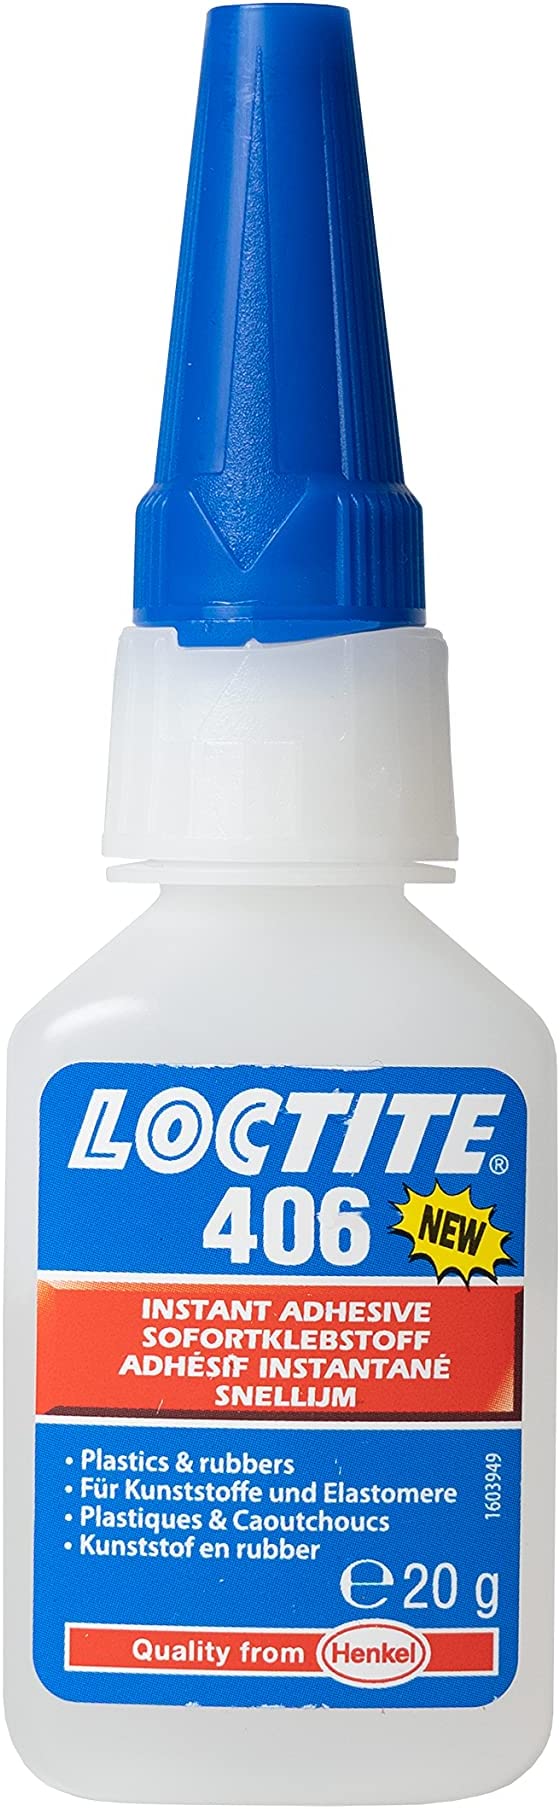 Loctite 406 (40640) 406 Prism Instant Adhesive (Wicking Grade), 20 Gram Bottle